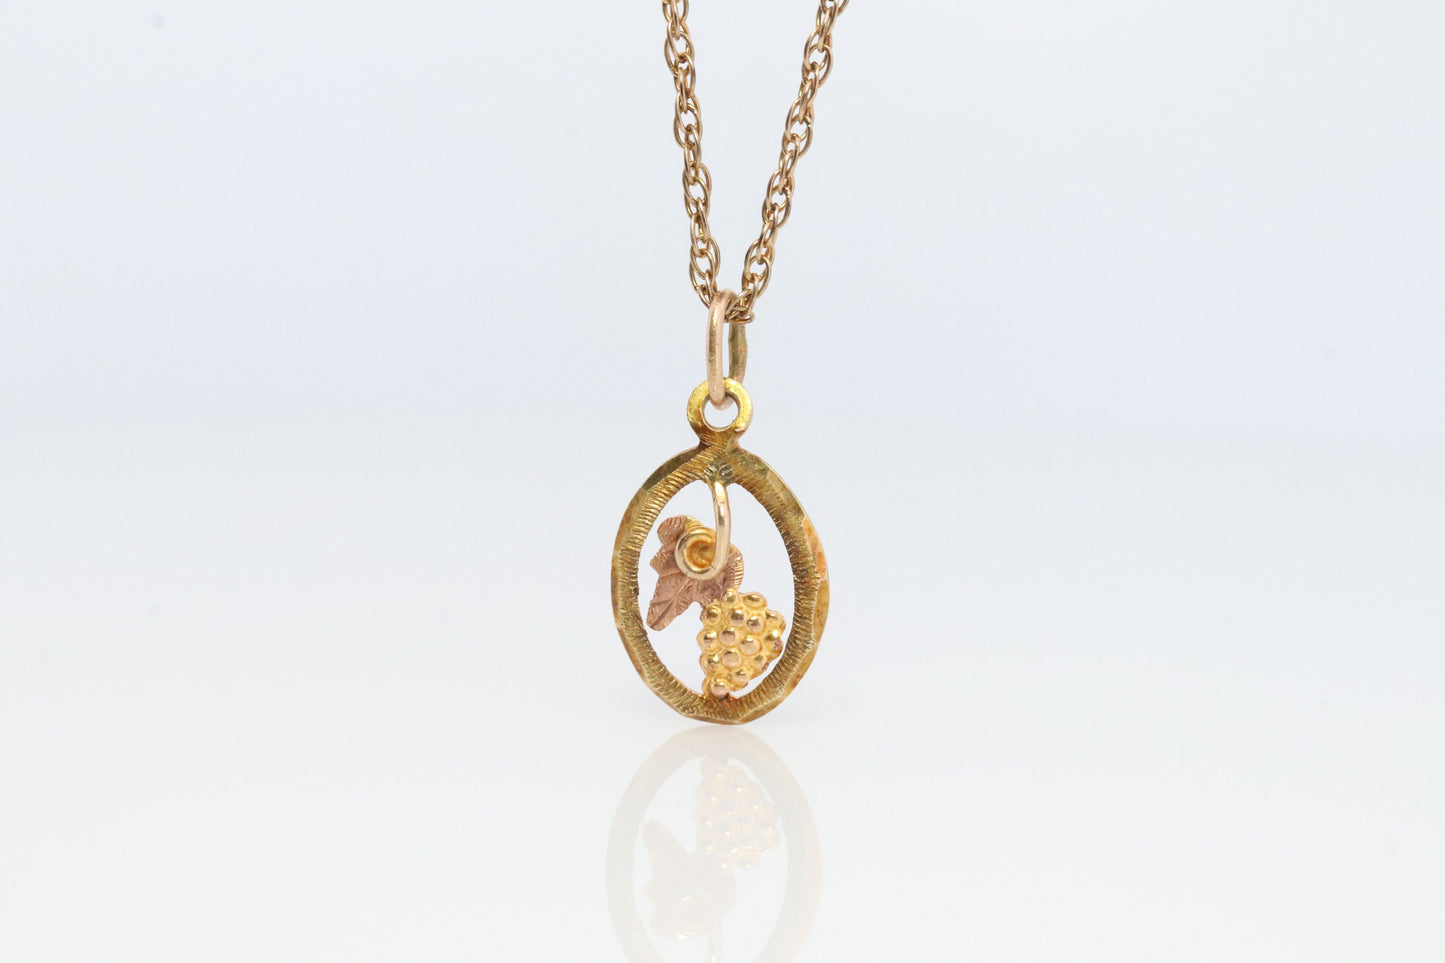 Black Hills Gold Necklace. 10k multi tone Black Hills Gold Pendant and Necklace